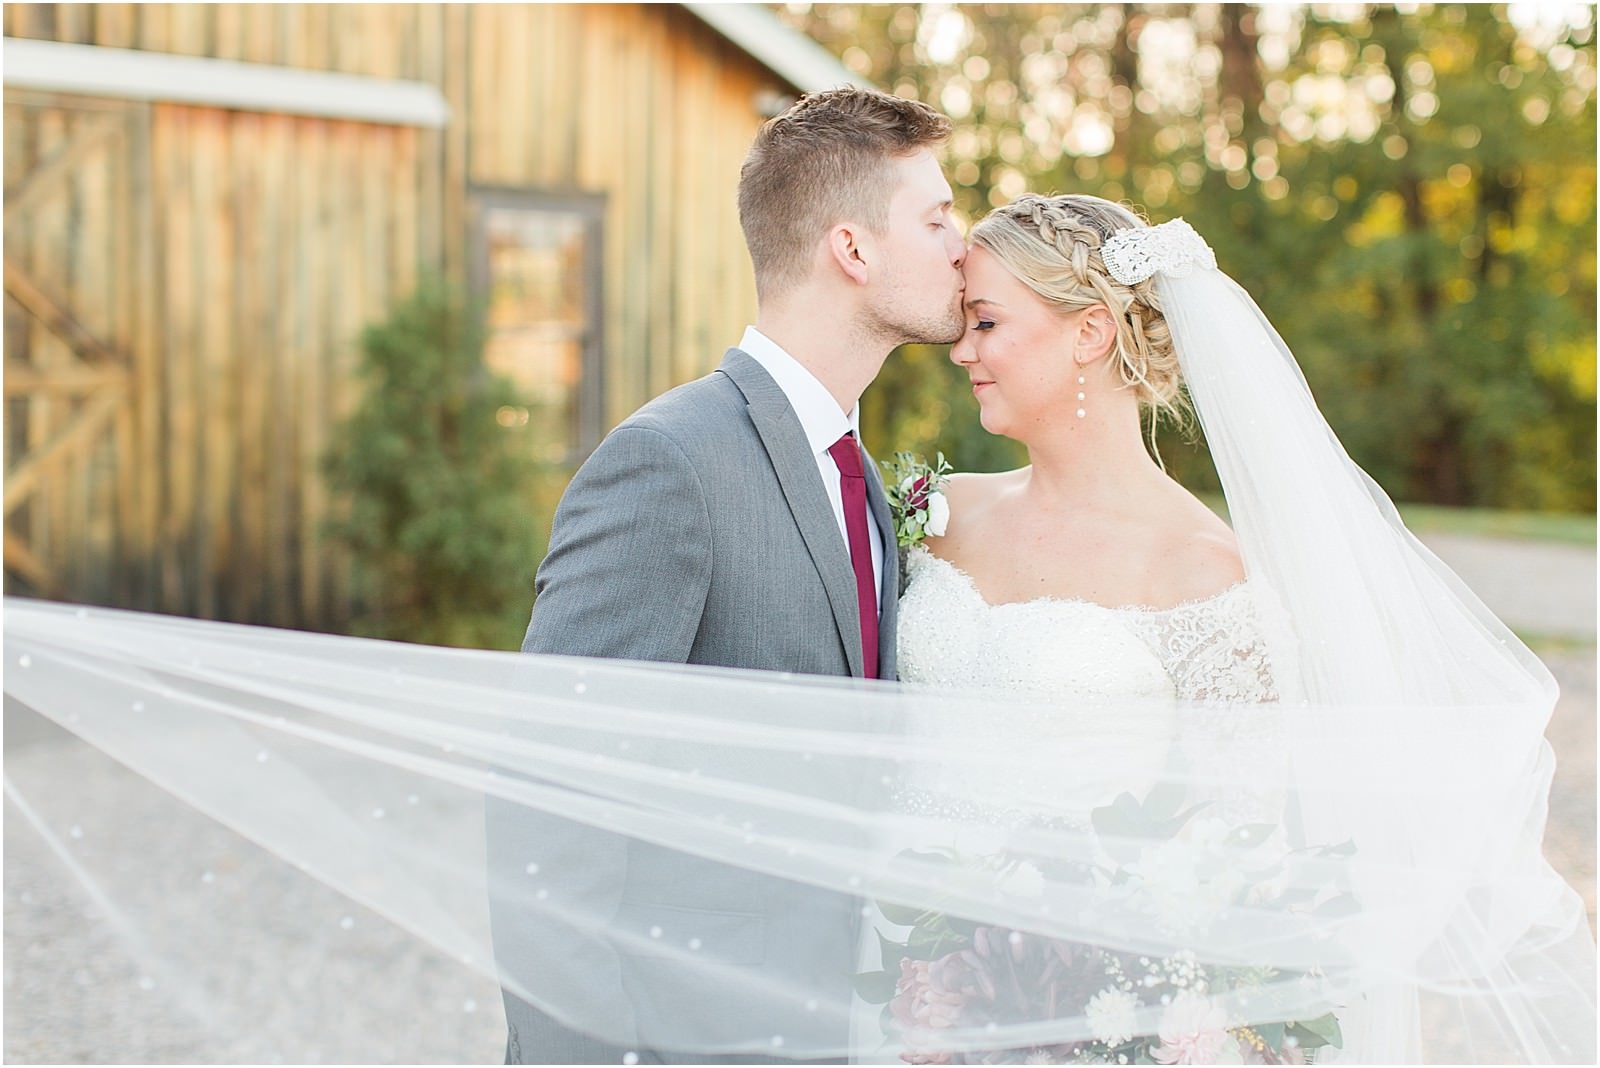 A Rainy Corner House Wedding | Rachel and Nick | Bret and Brandie Photography 0092.jpg